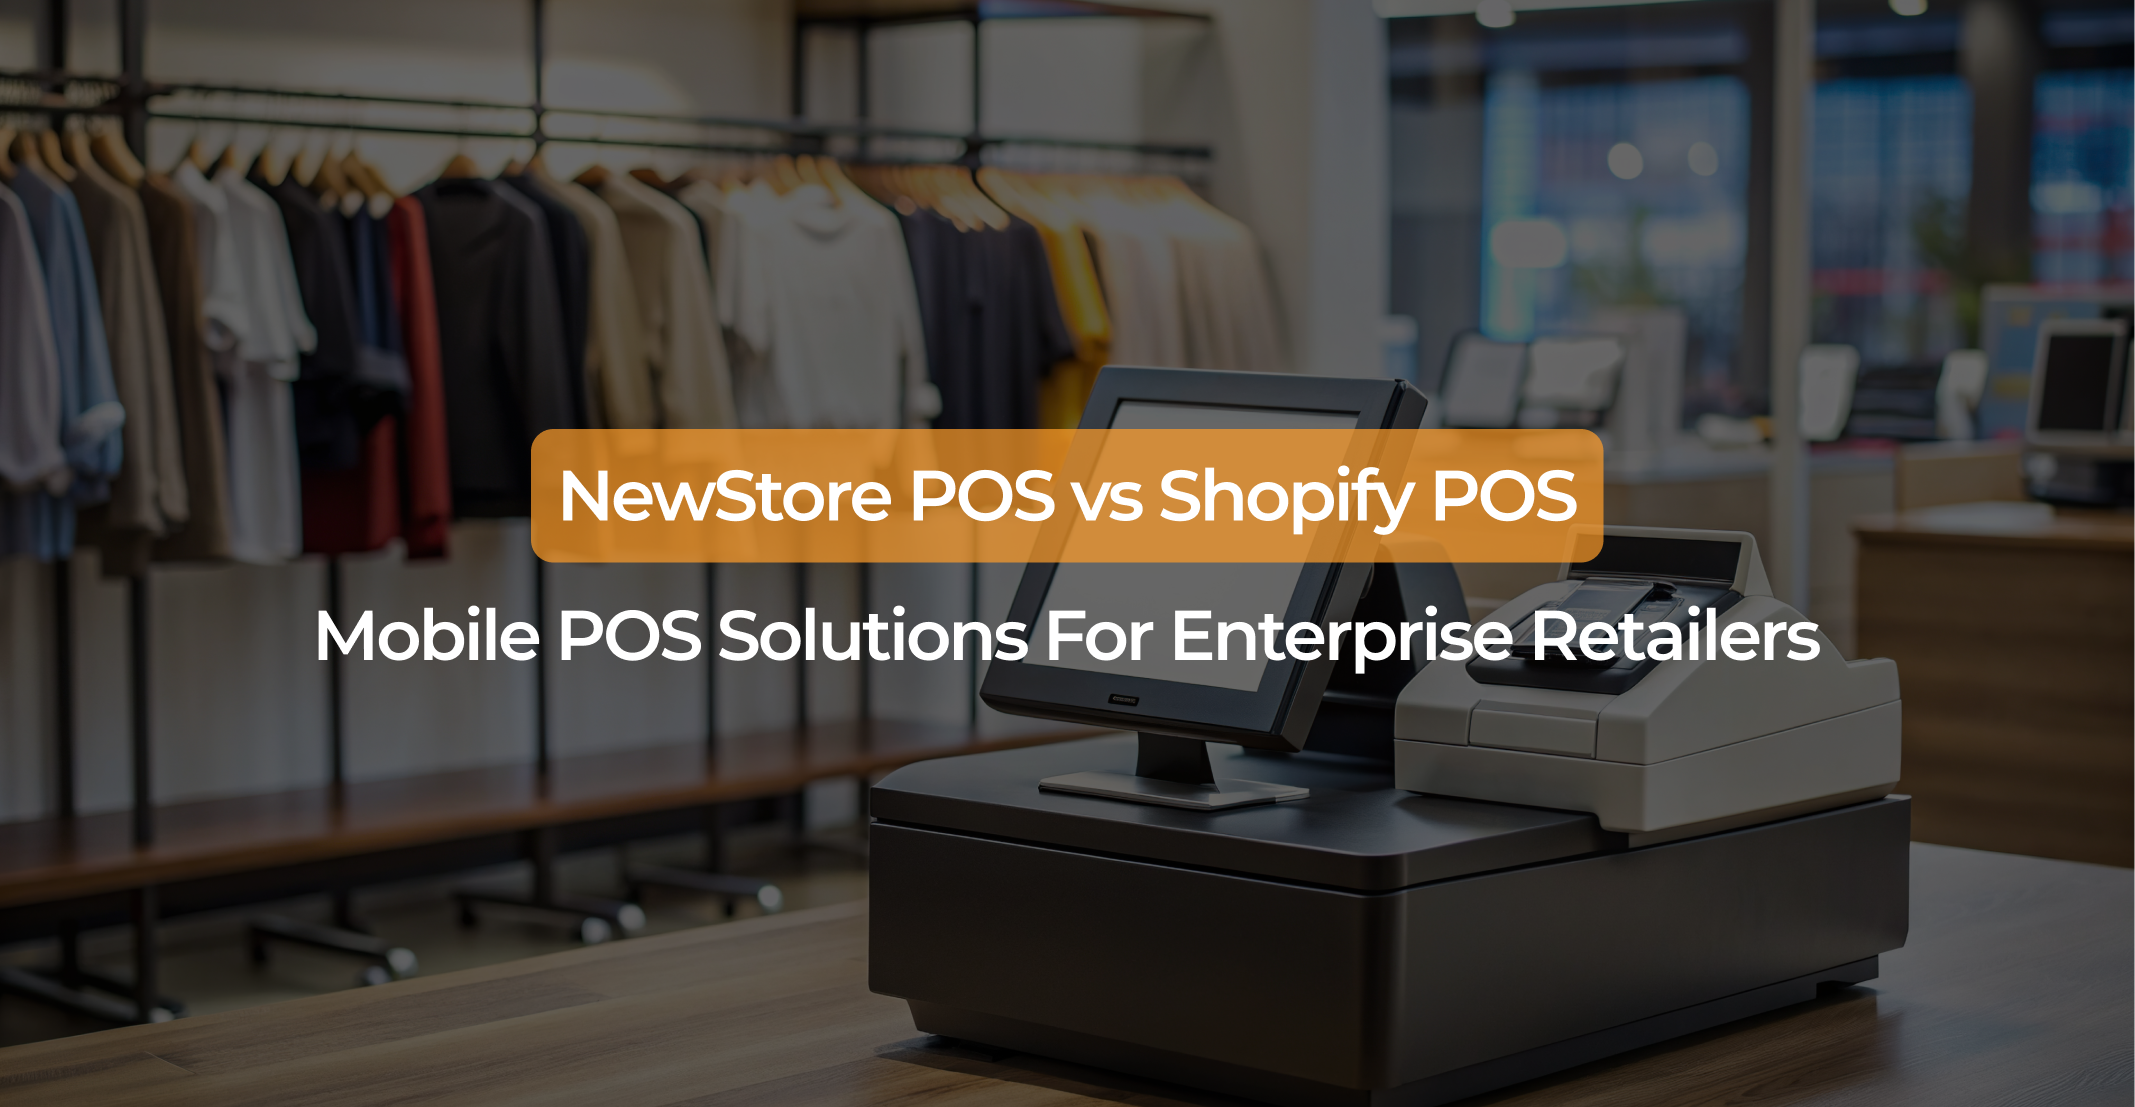 NewStore POS vs Shopify POS for enterprise retailers